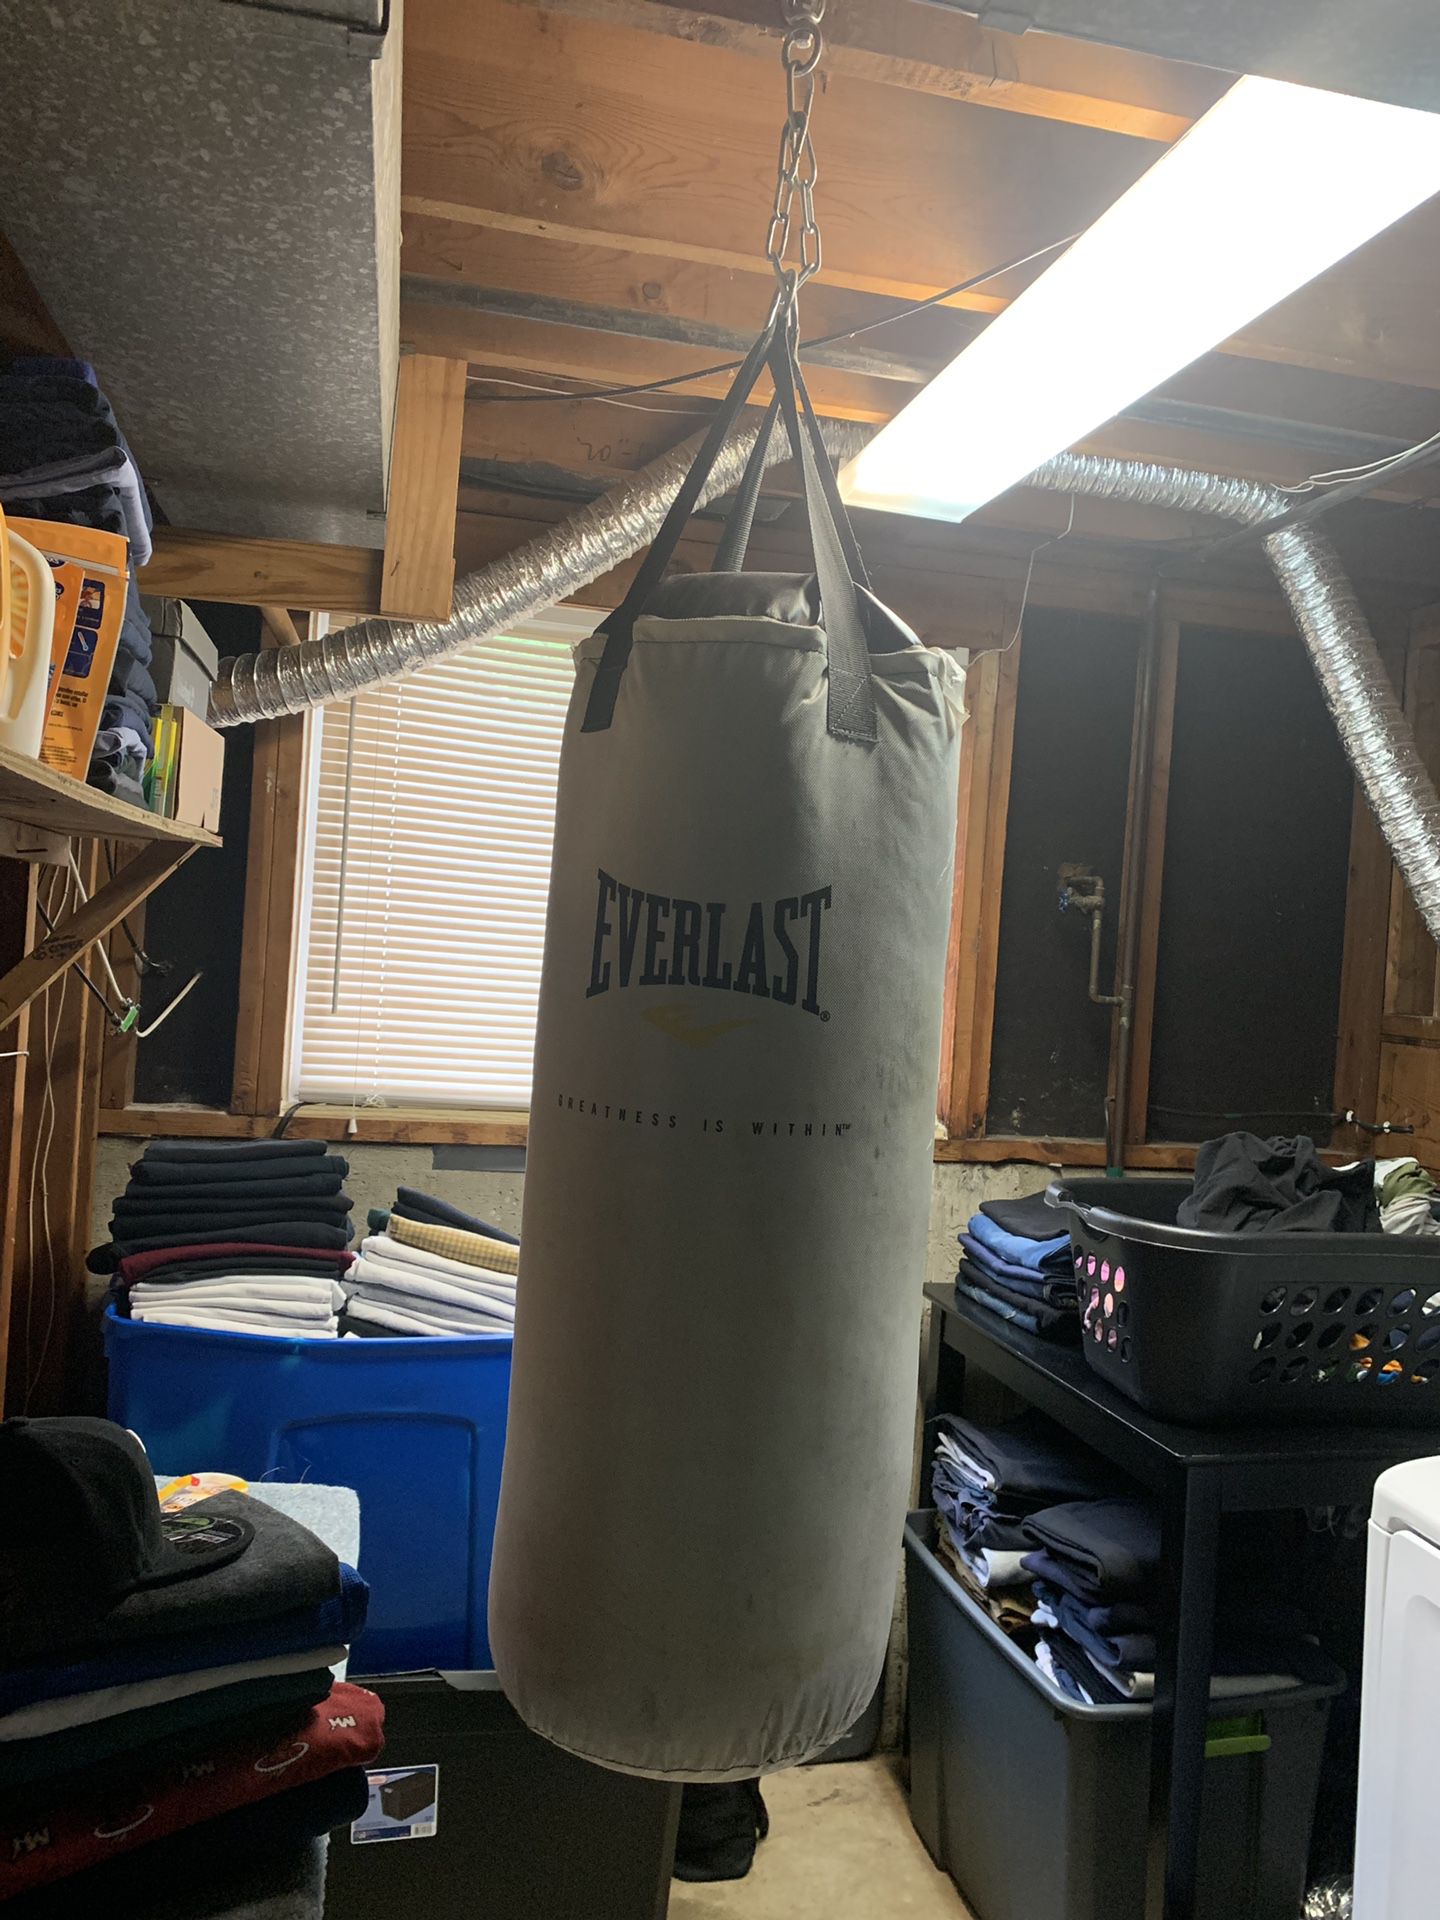 Everlast boxing equipment